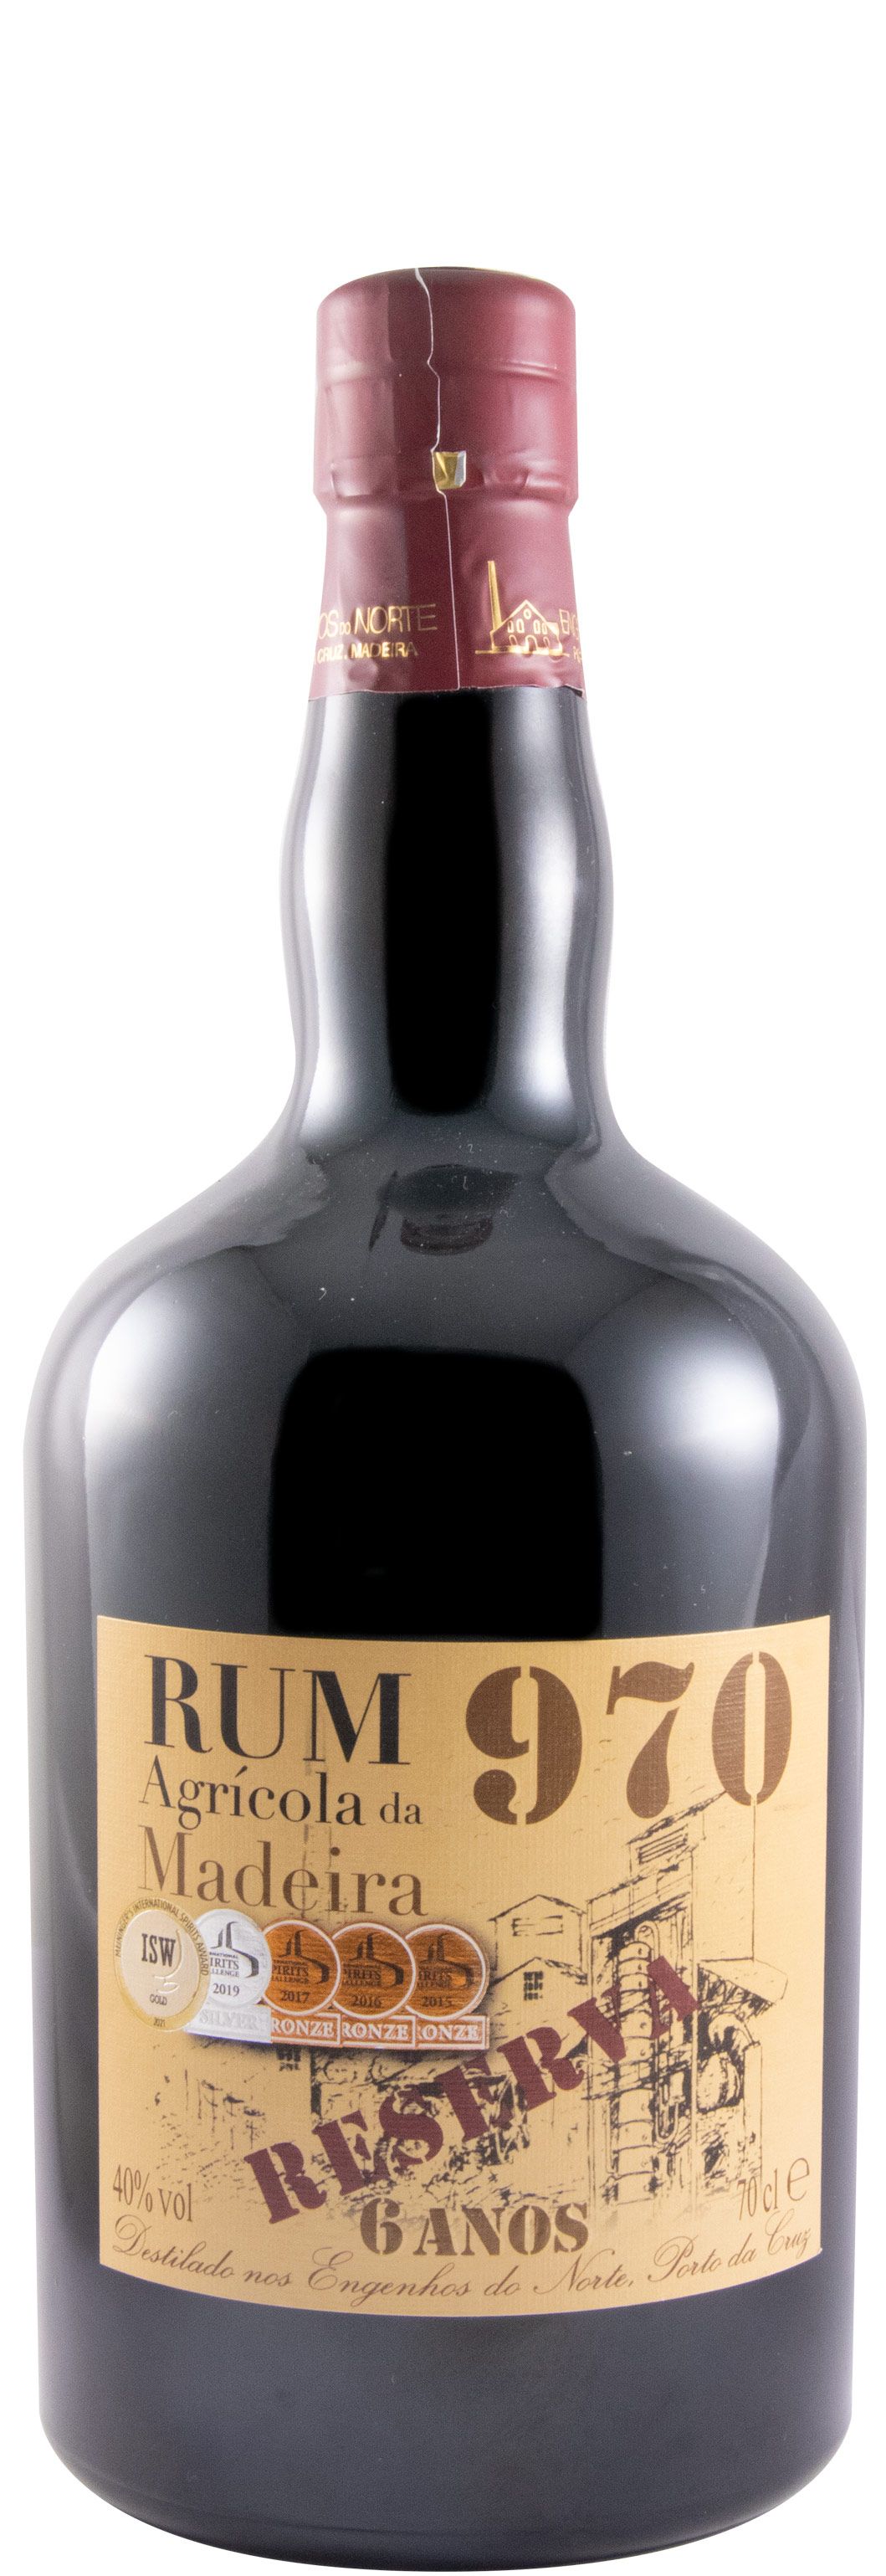 Rum Agrícola da Madeira 970 Reserva 6 anos